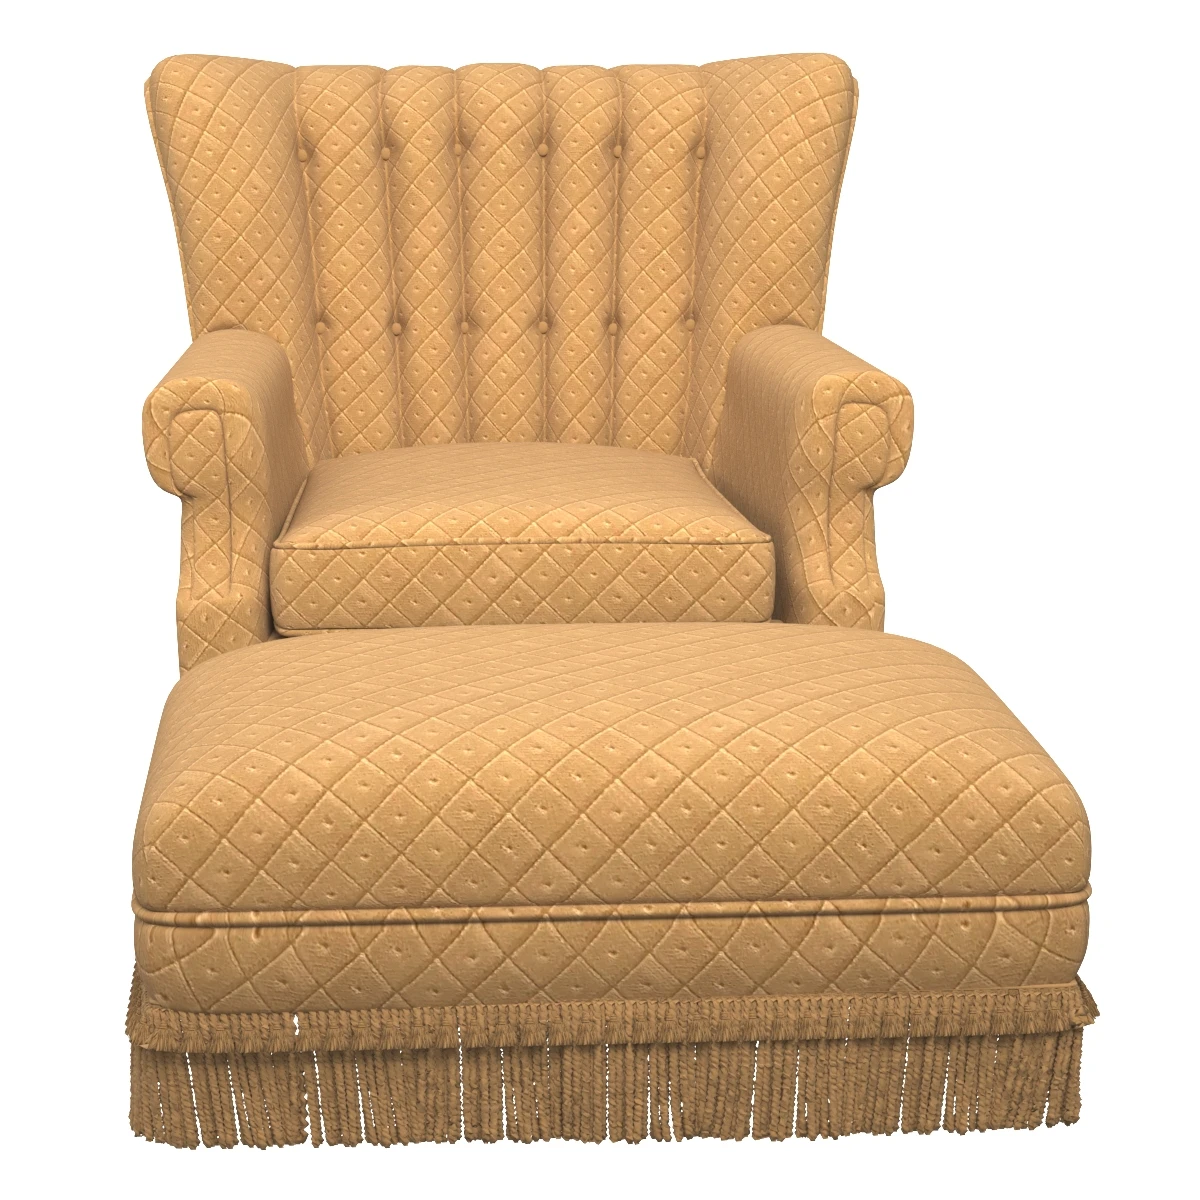 Art Deco Club Chair and Ottoman by Swaim 3D Model_06